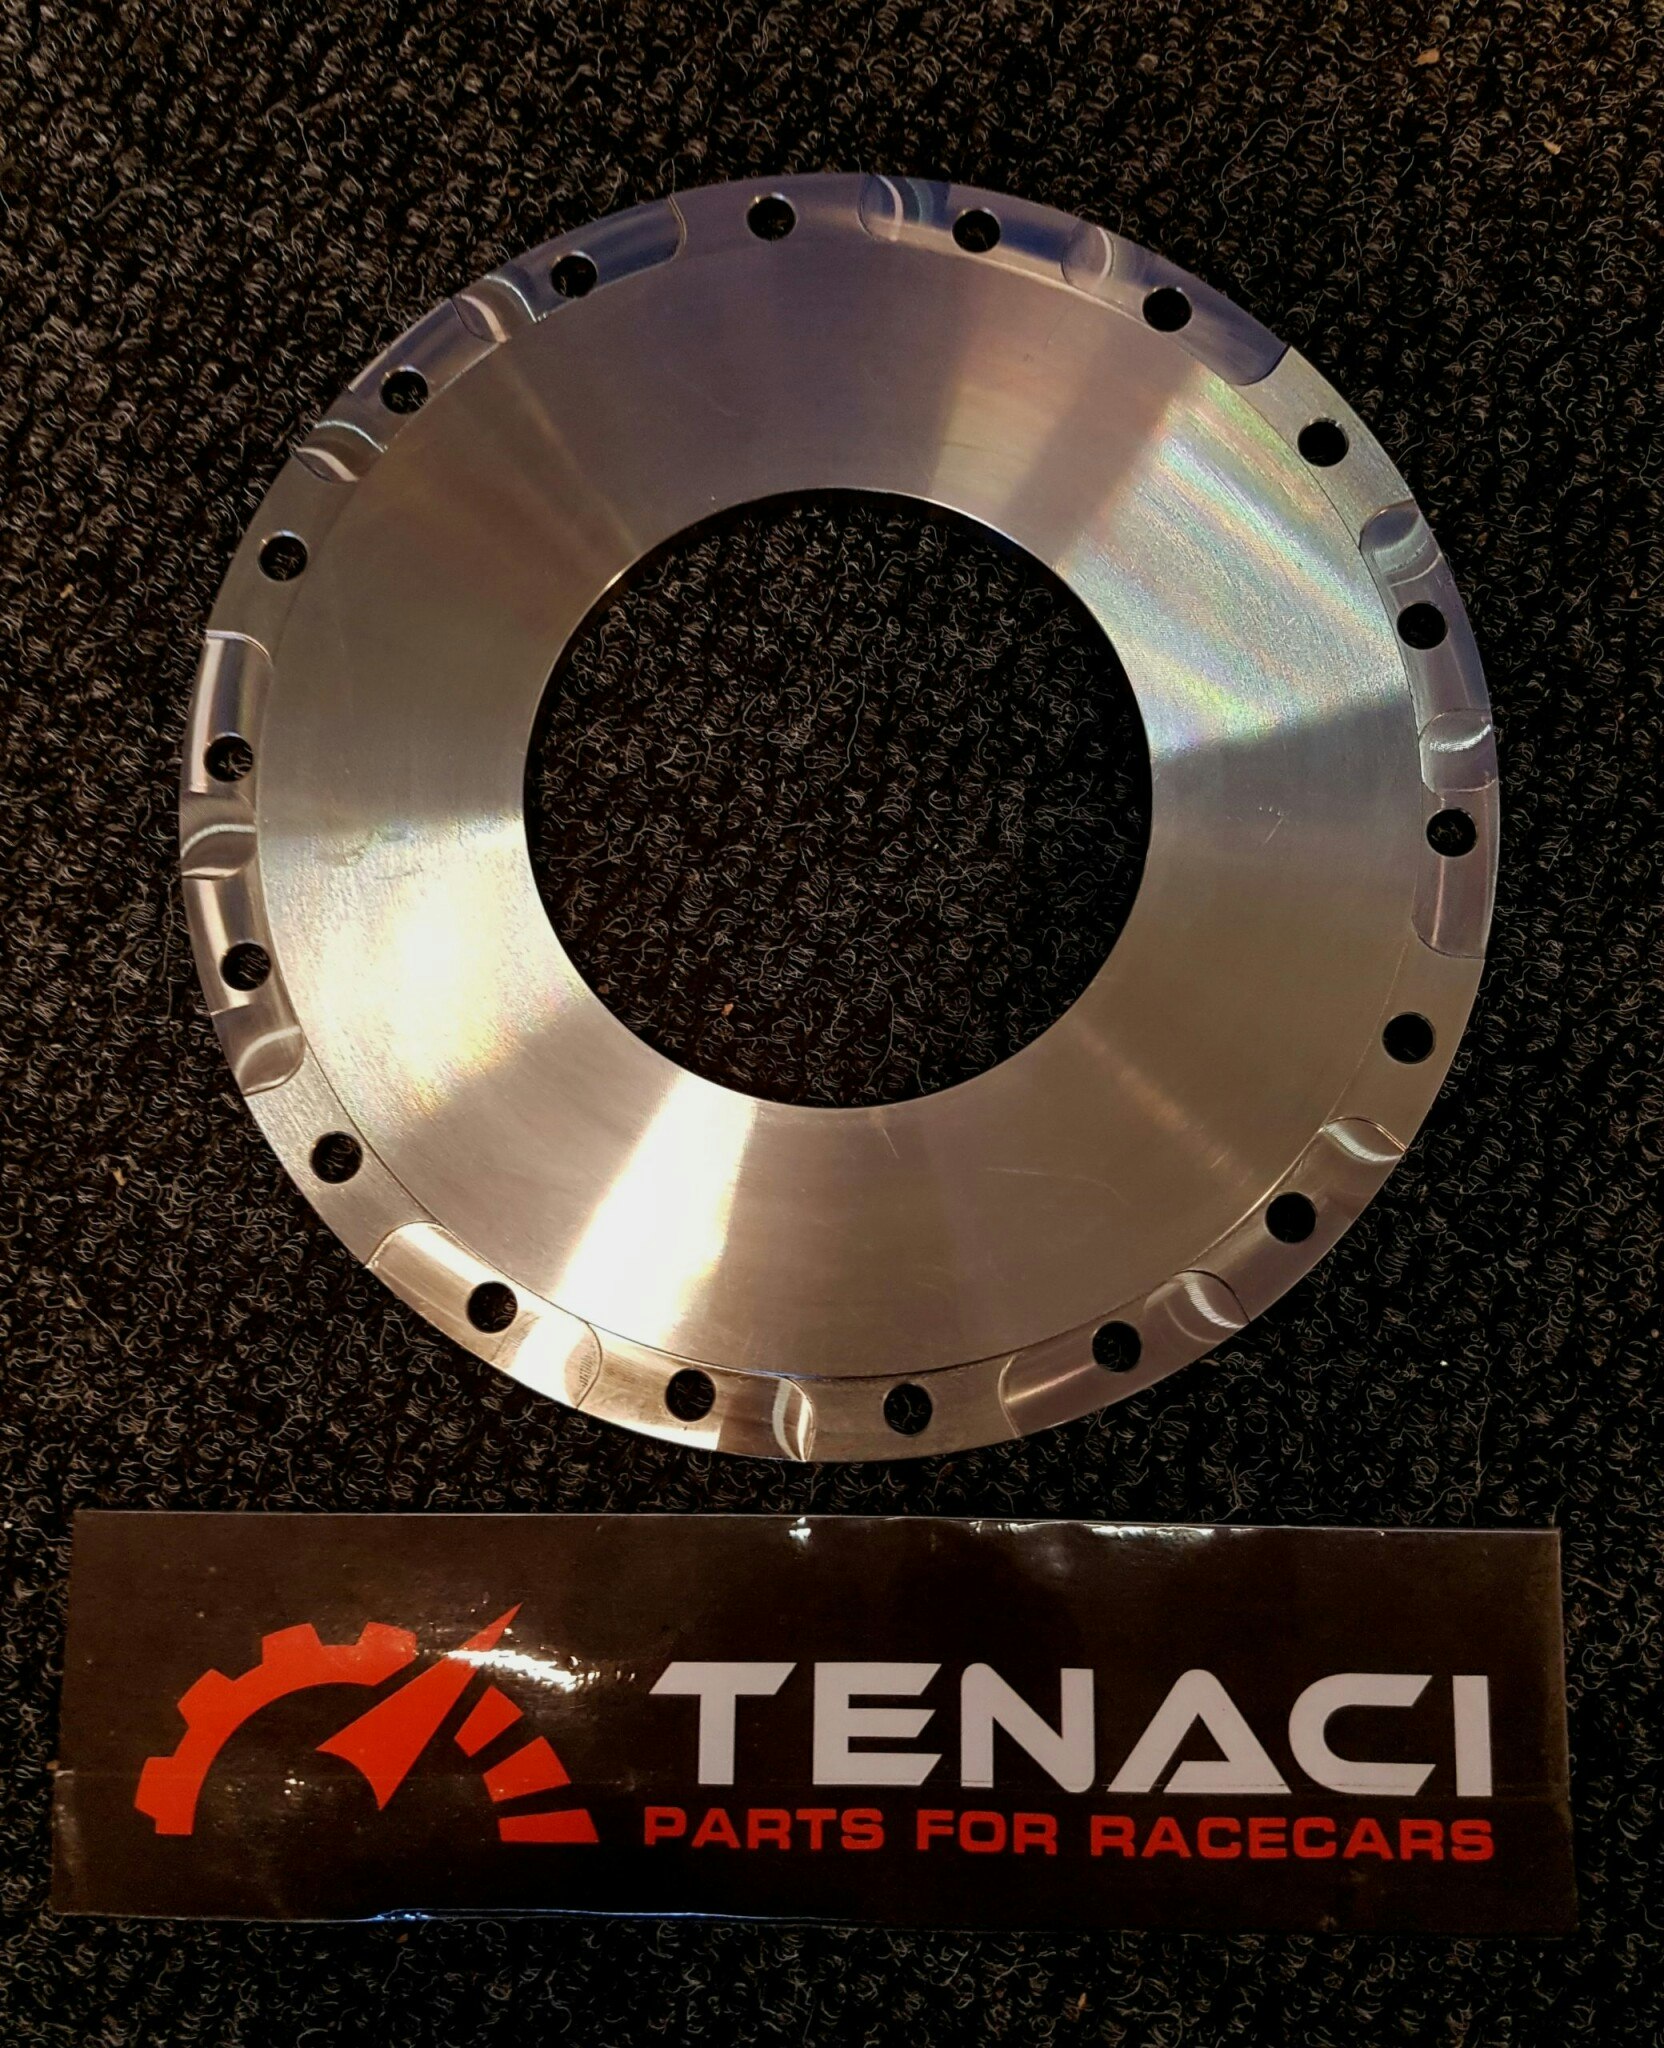 Tenaci Back Plate 184 mm